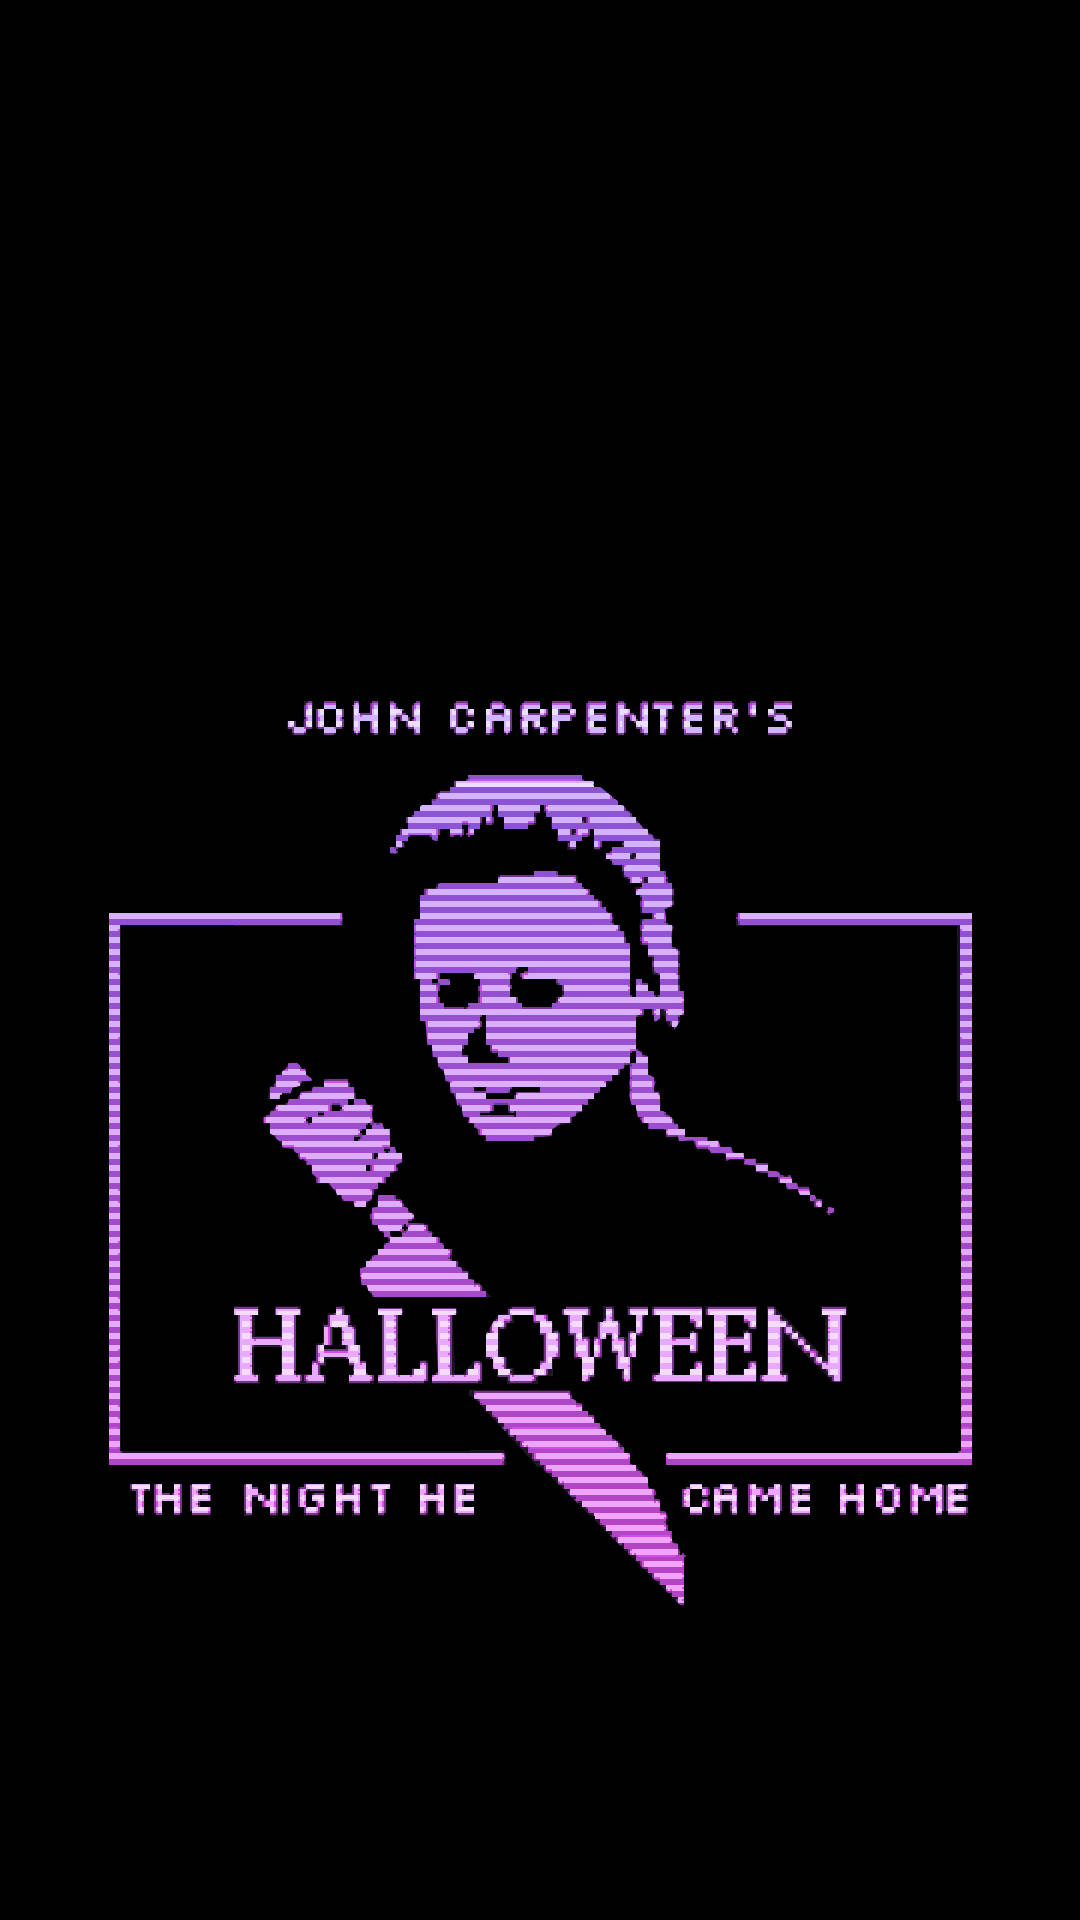 Johncarpenter Halloween Michael Myers Iphone - John Carpenter Halloween Michael Myers Till Iphone Wallpaper